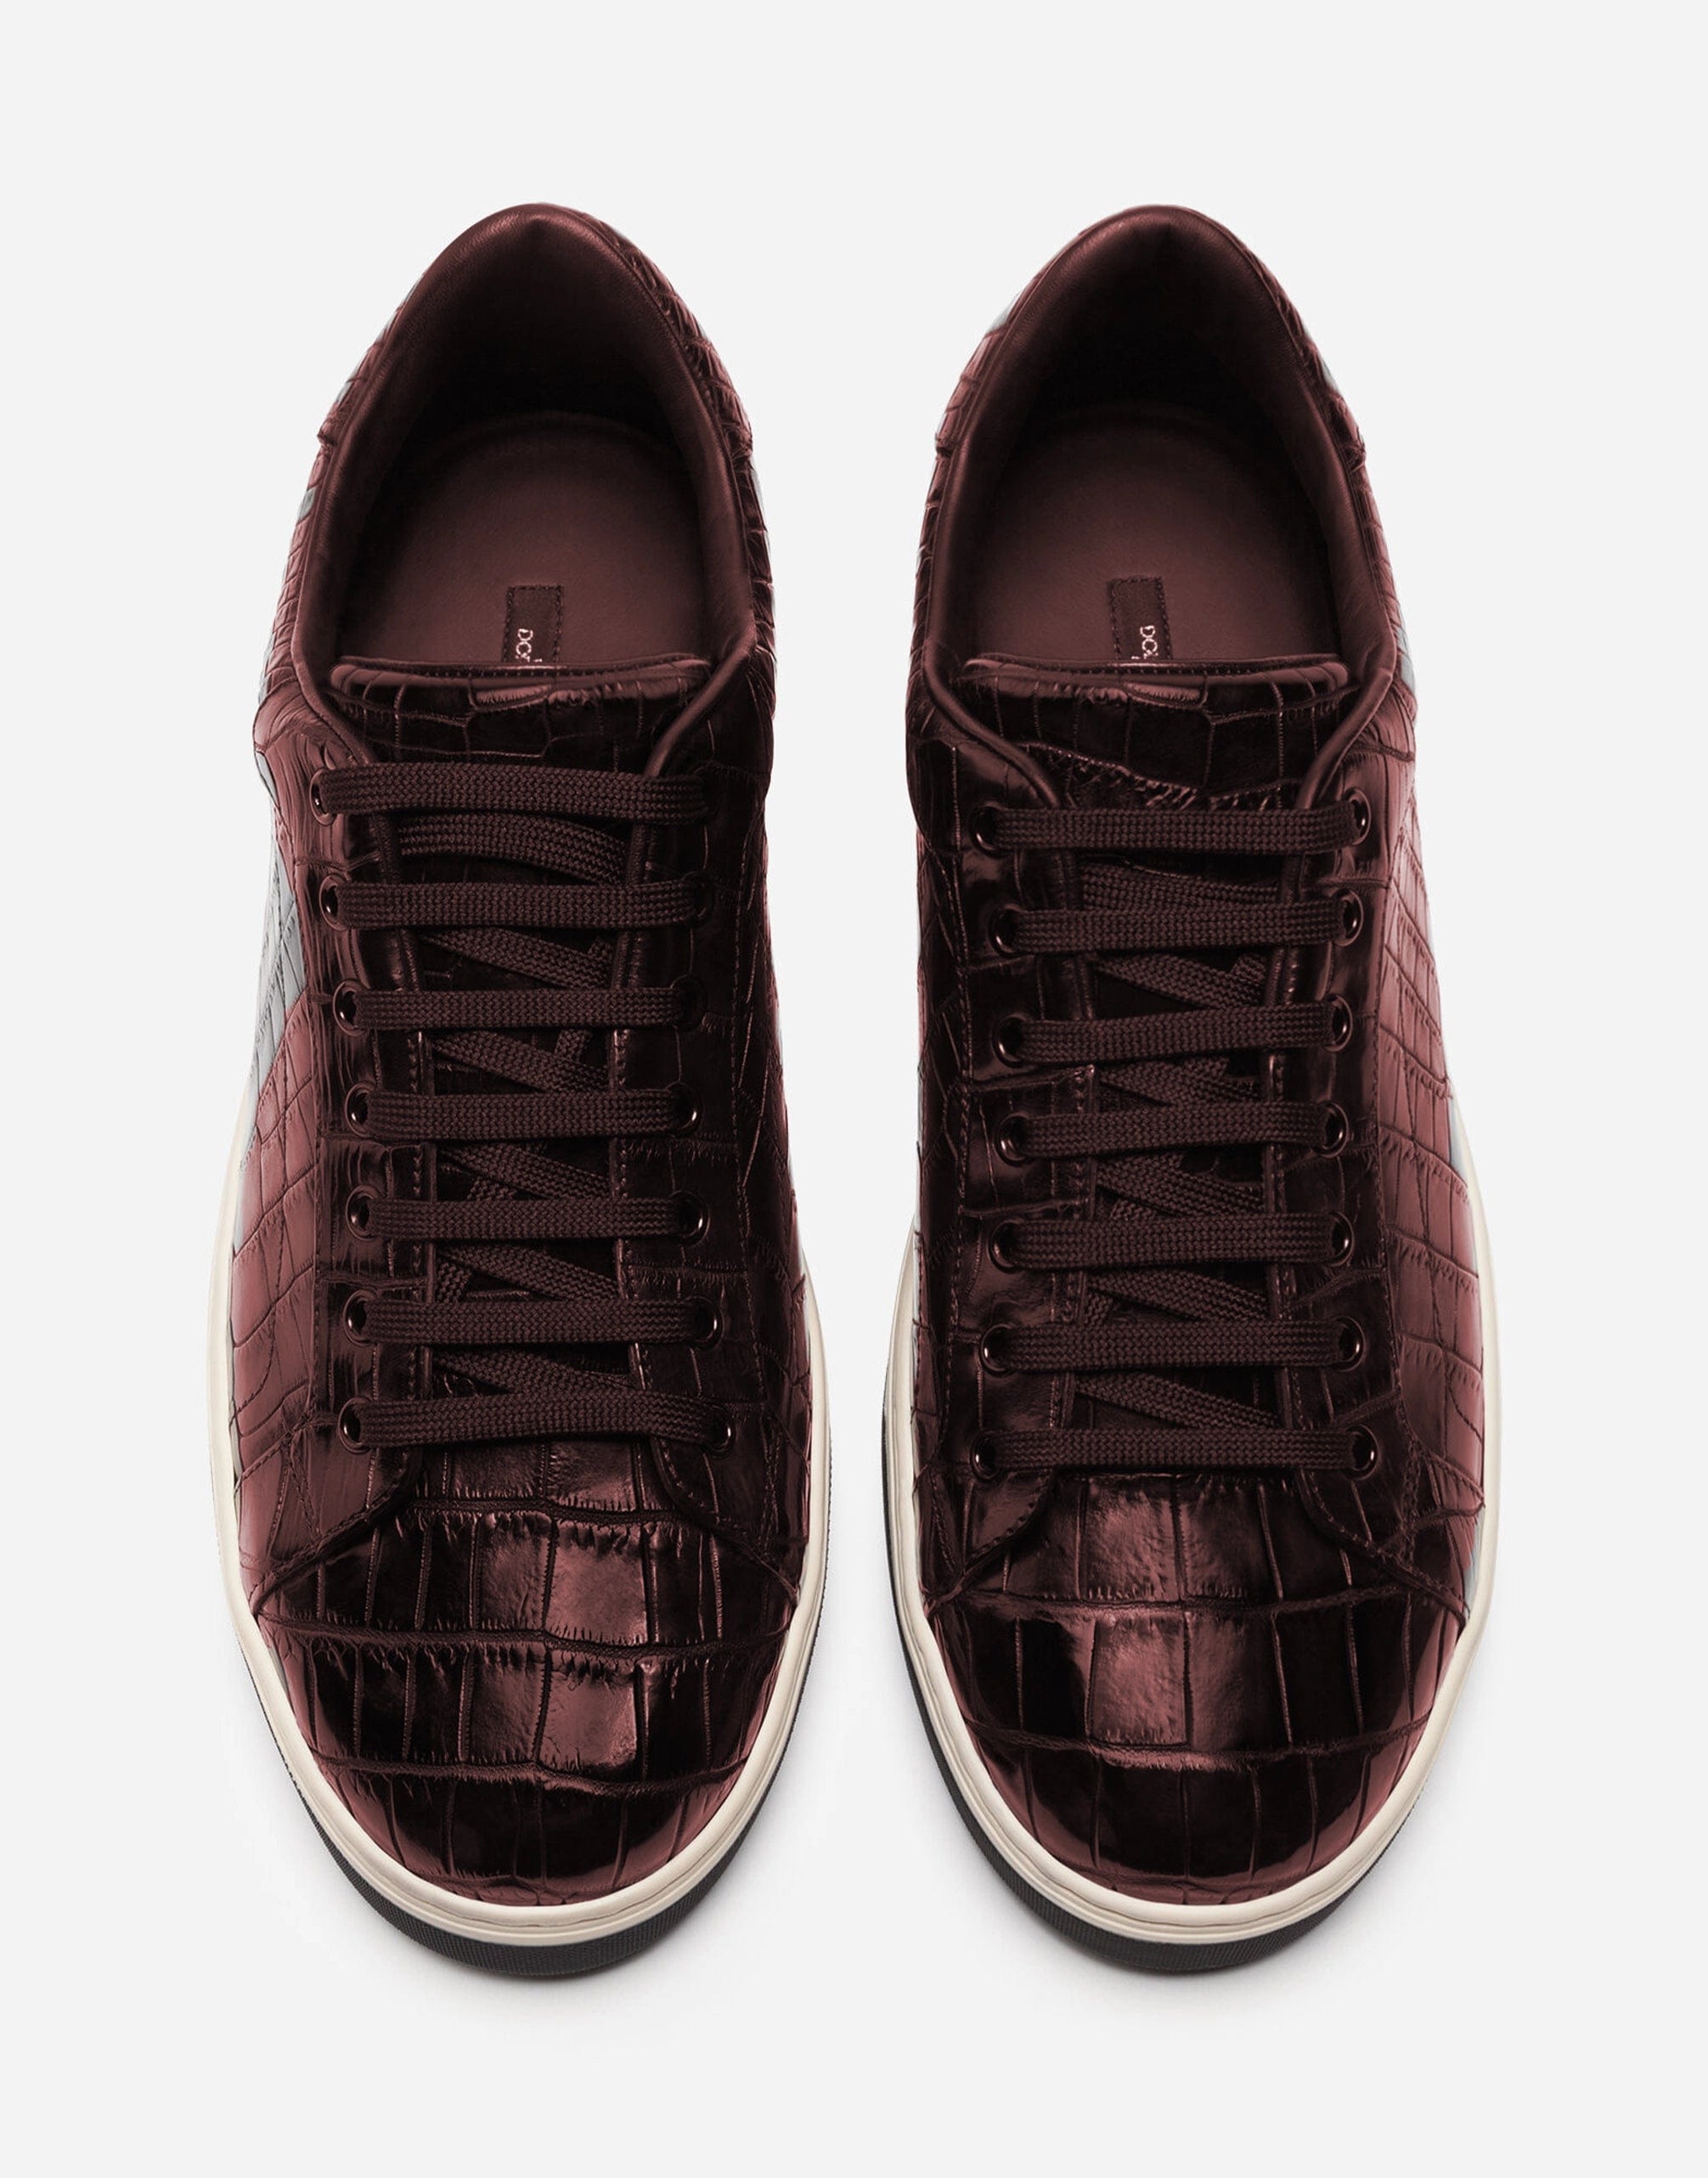 Dolce & Gabbana Crocodile Leather Rome Sneakers